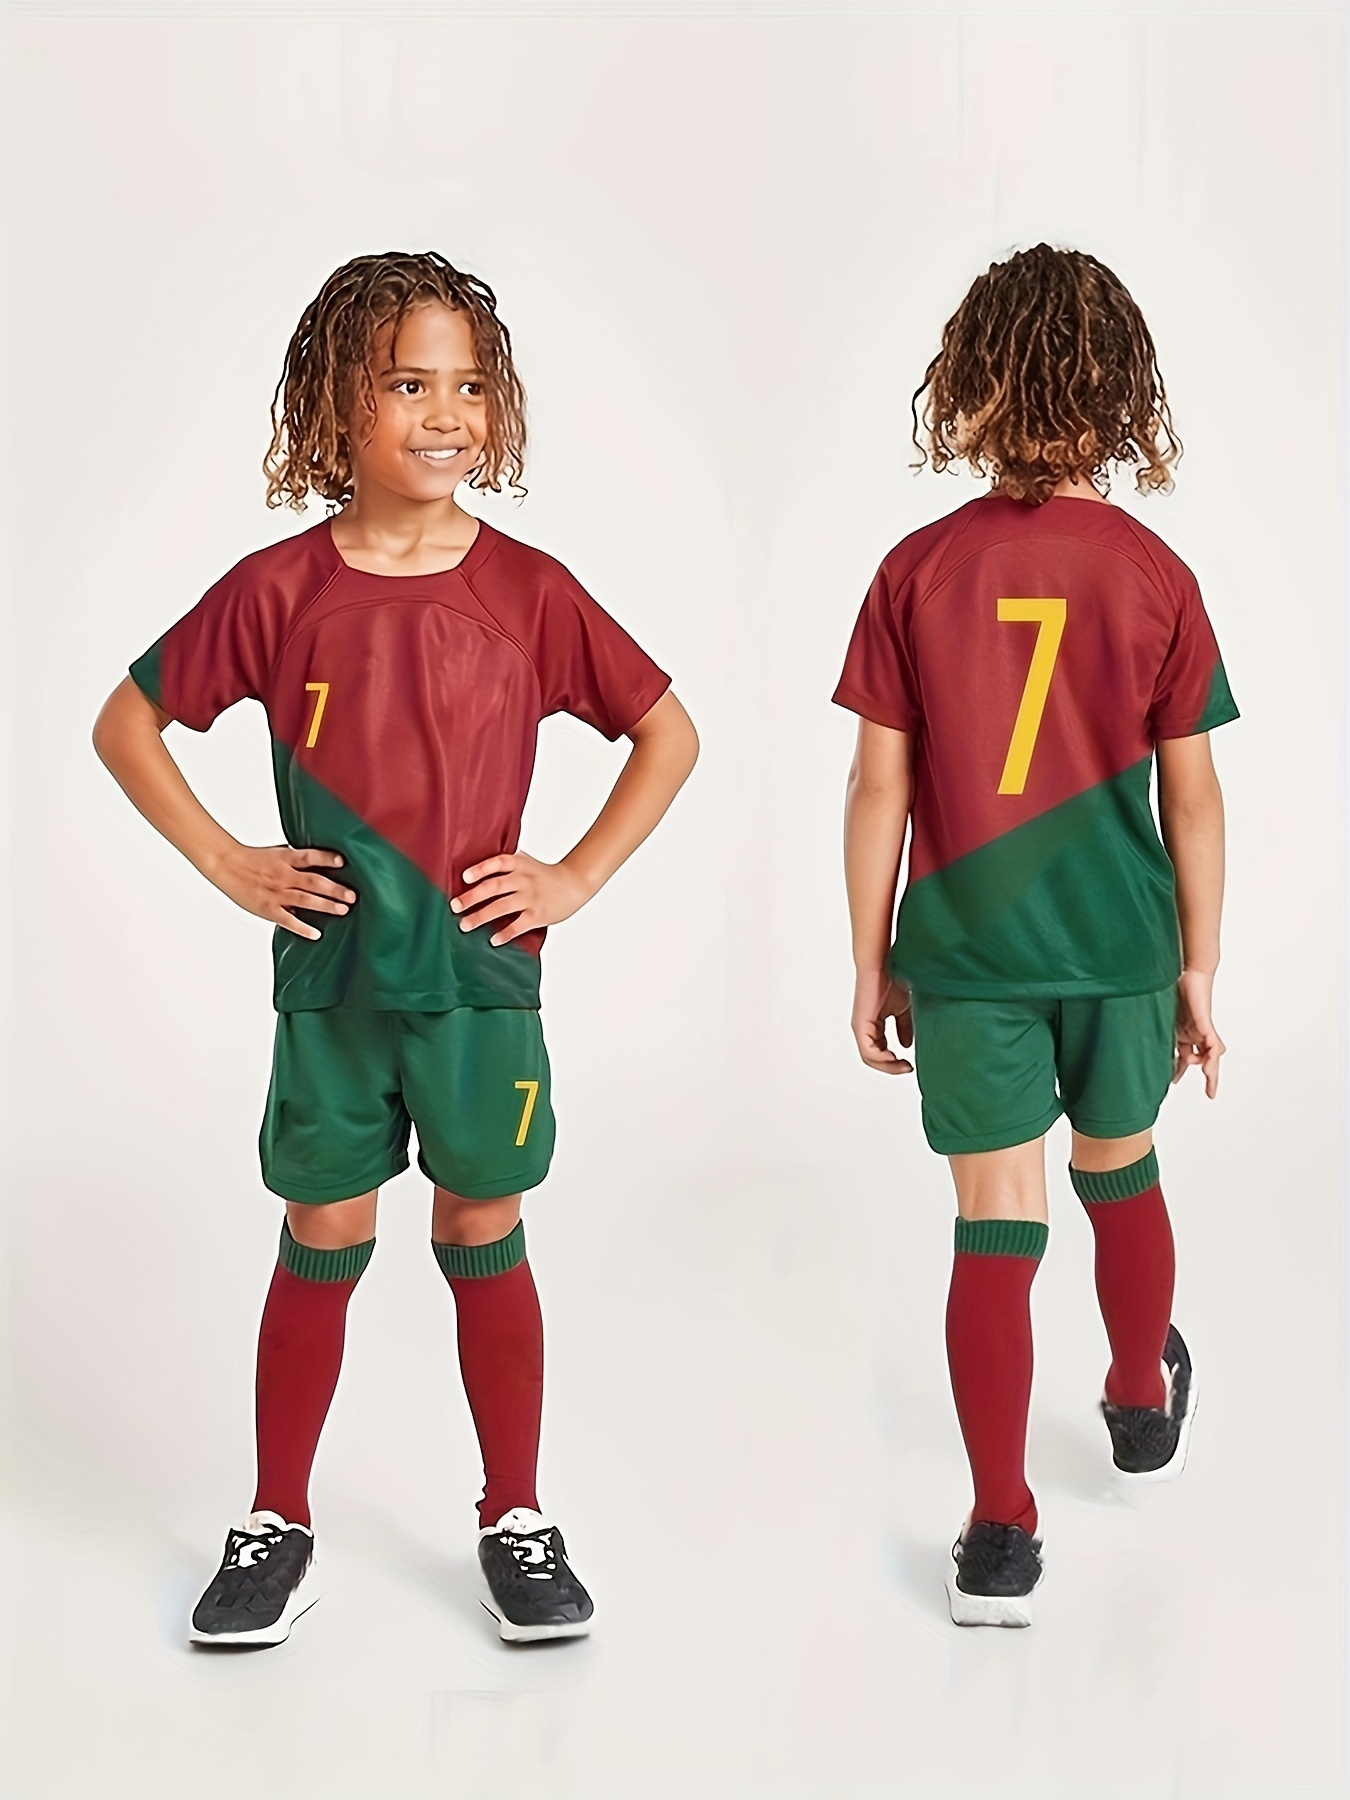 Peto enteramiento infantil Umbro Humter  Camisetas estampadas, Futbol,  Entrenamiento futbol